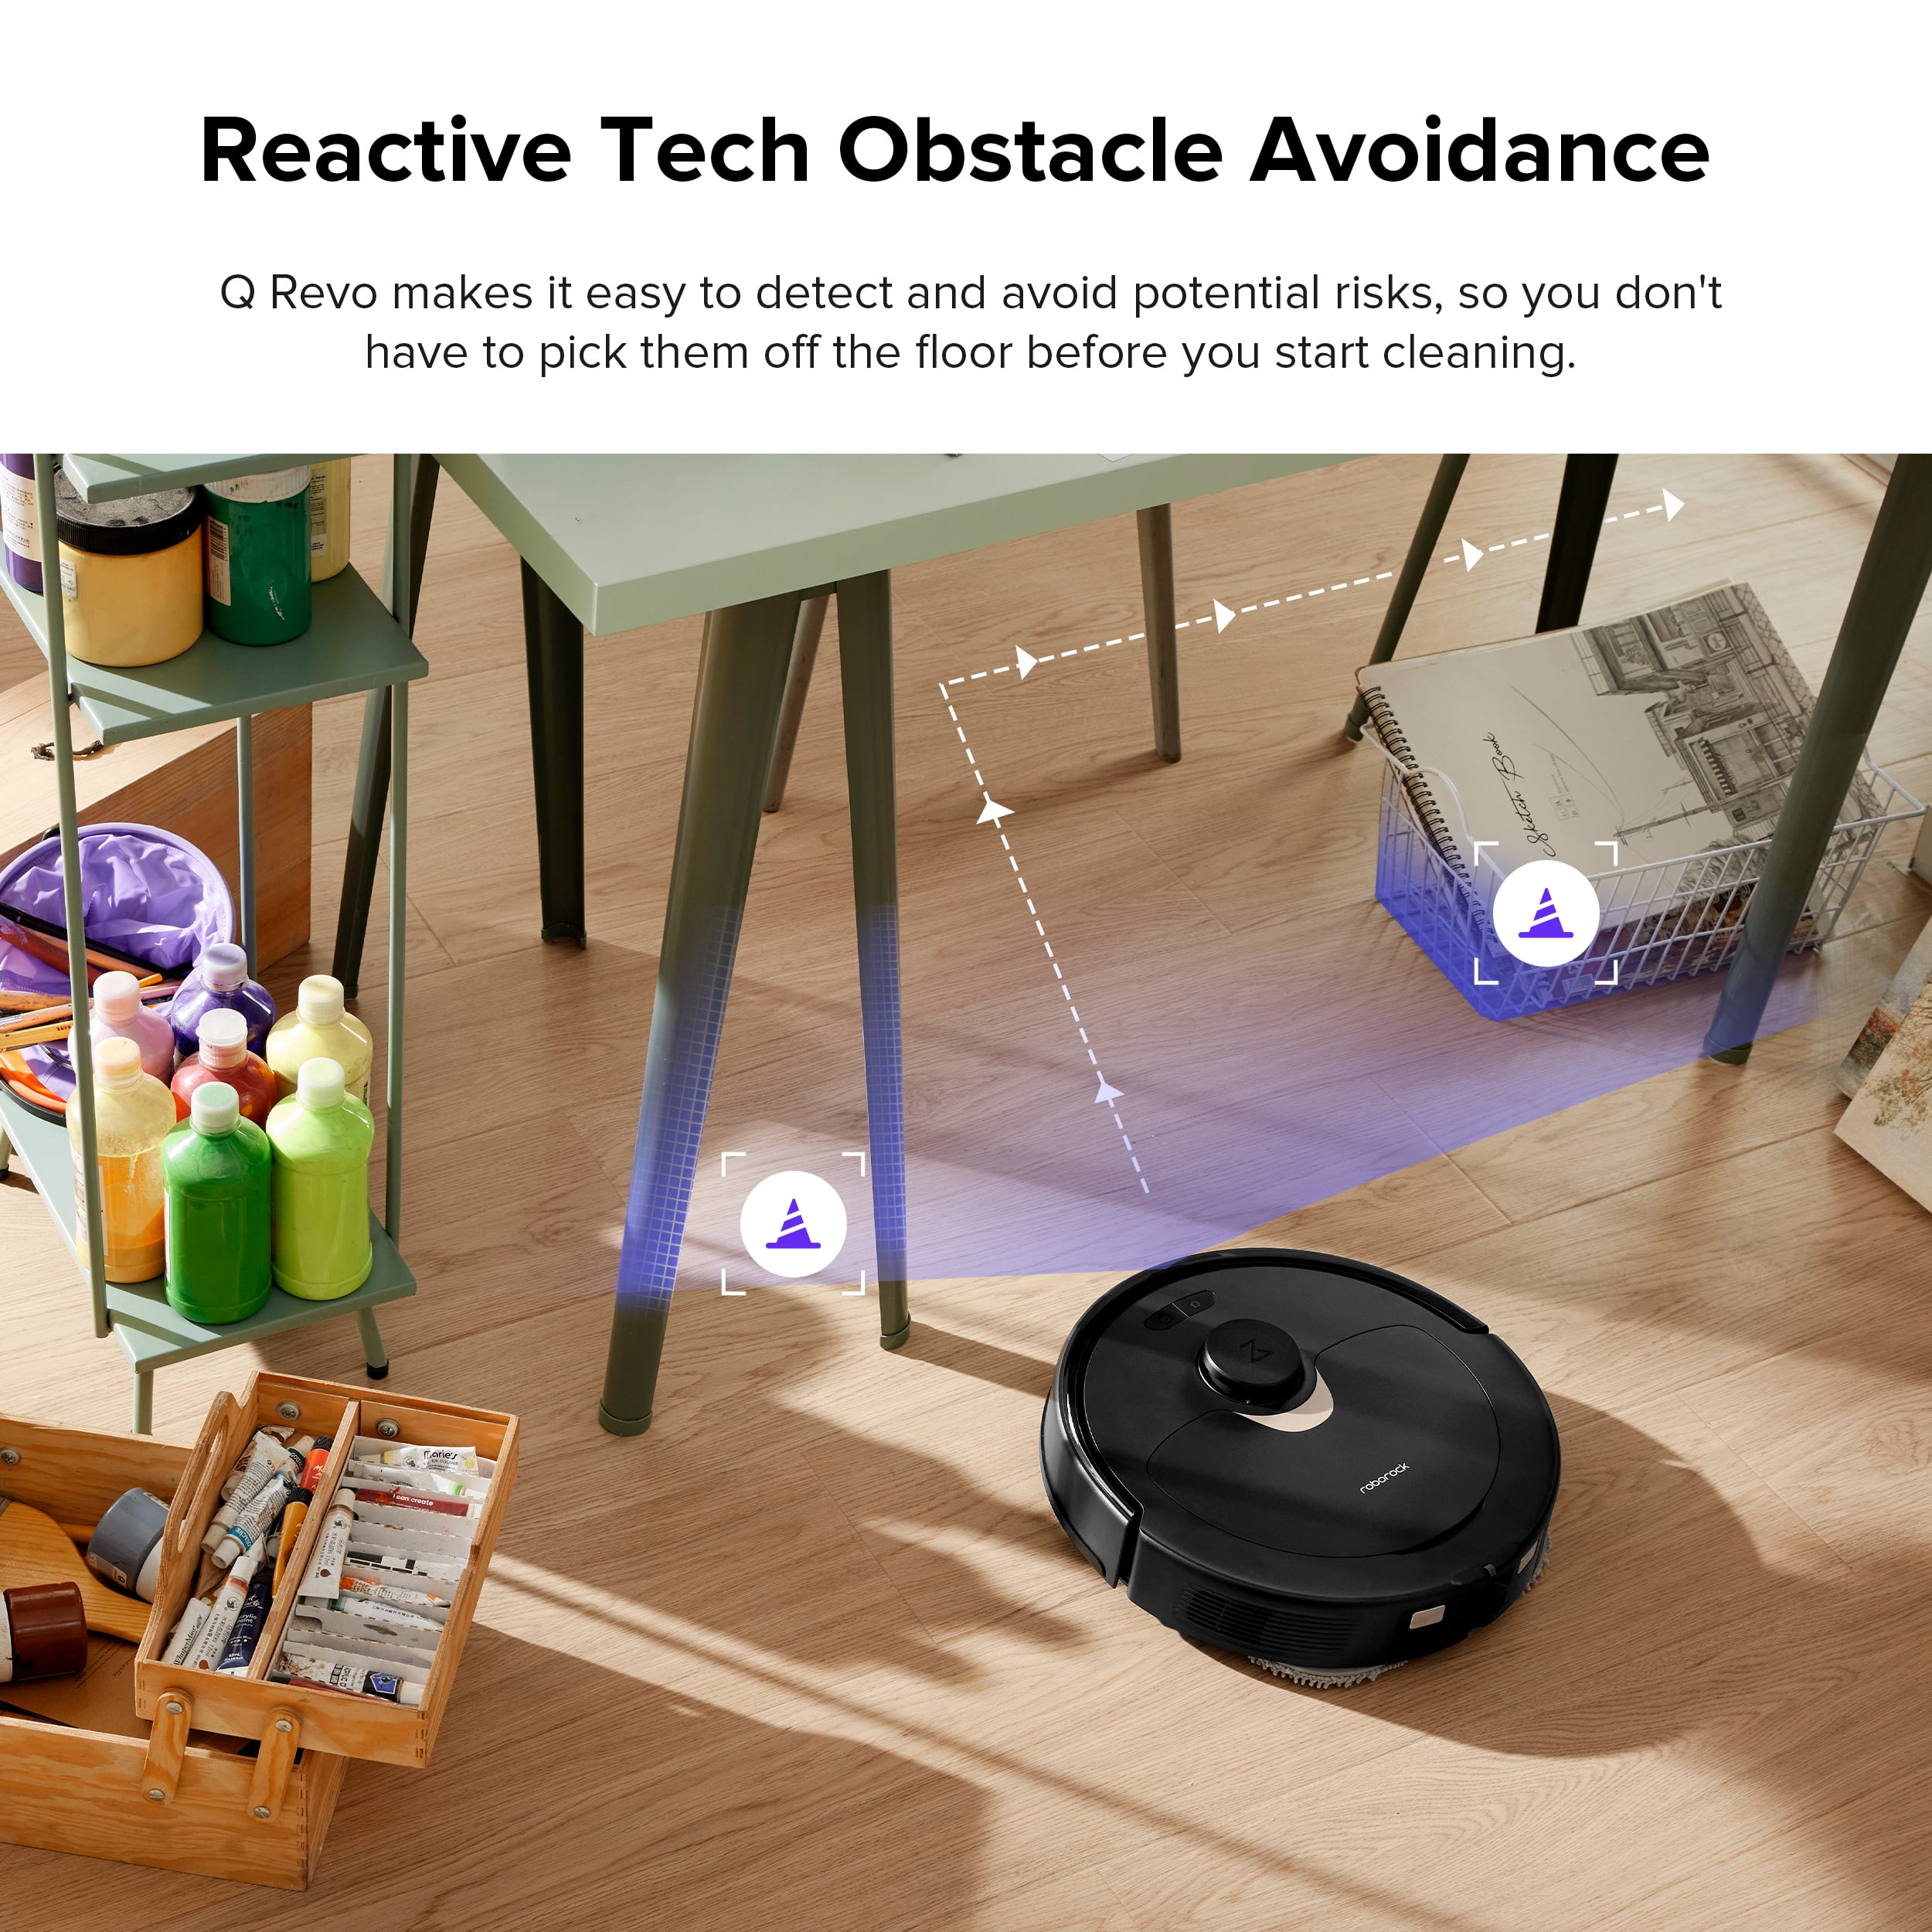 Roborock® Q Revo Robot Vacuum and Mop with Self-Emptying, Self